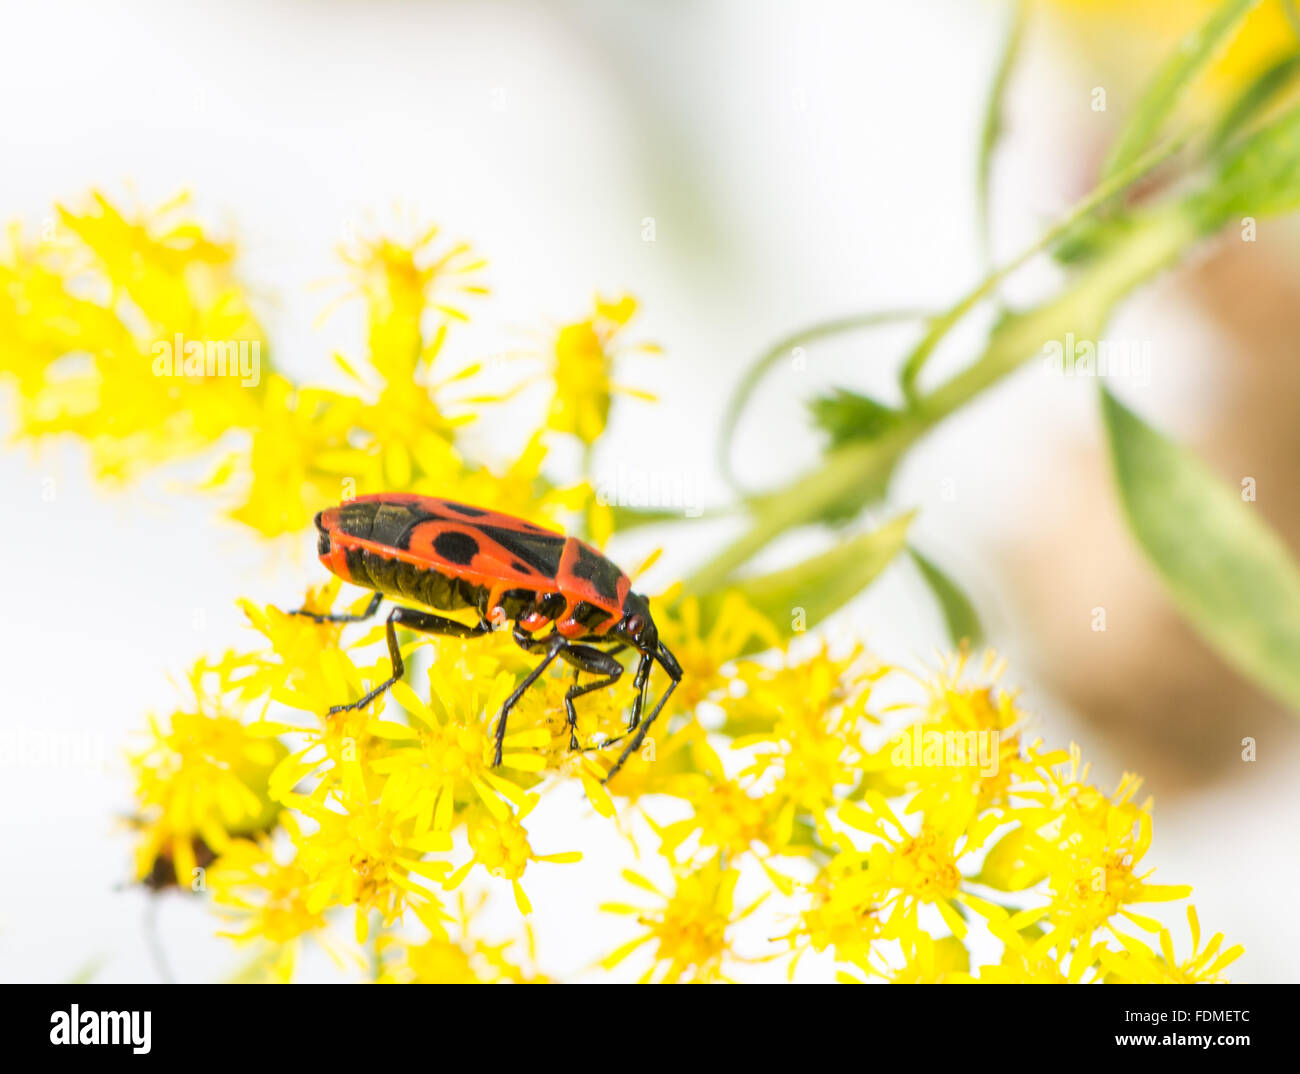 Macro of a firebug (Pyrrhocoris apterus) on a yellow flower Stock Photo